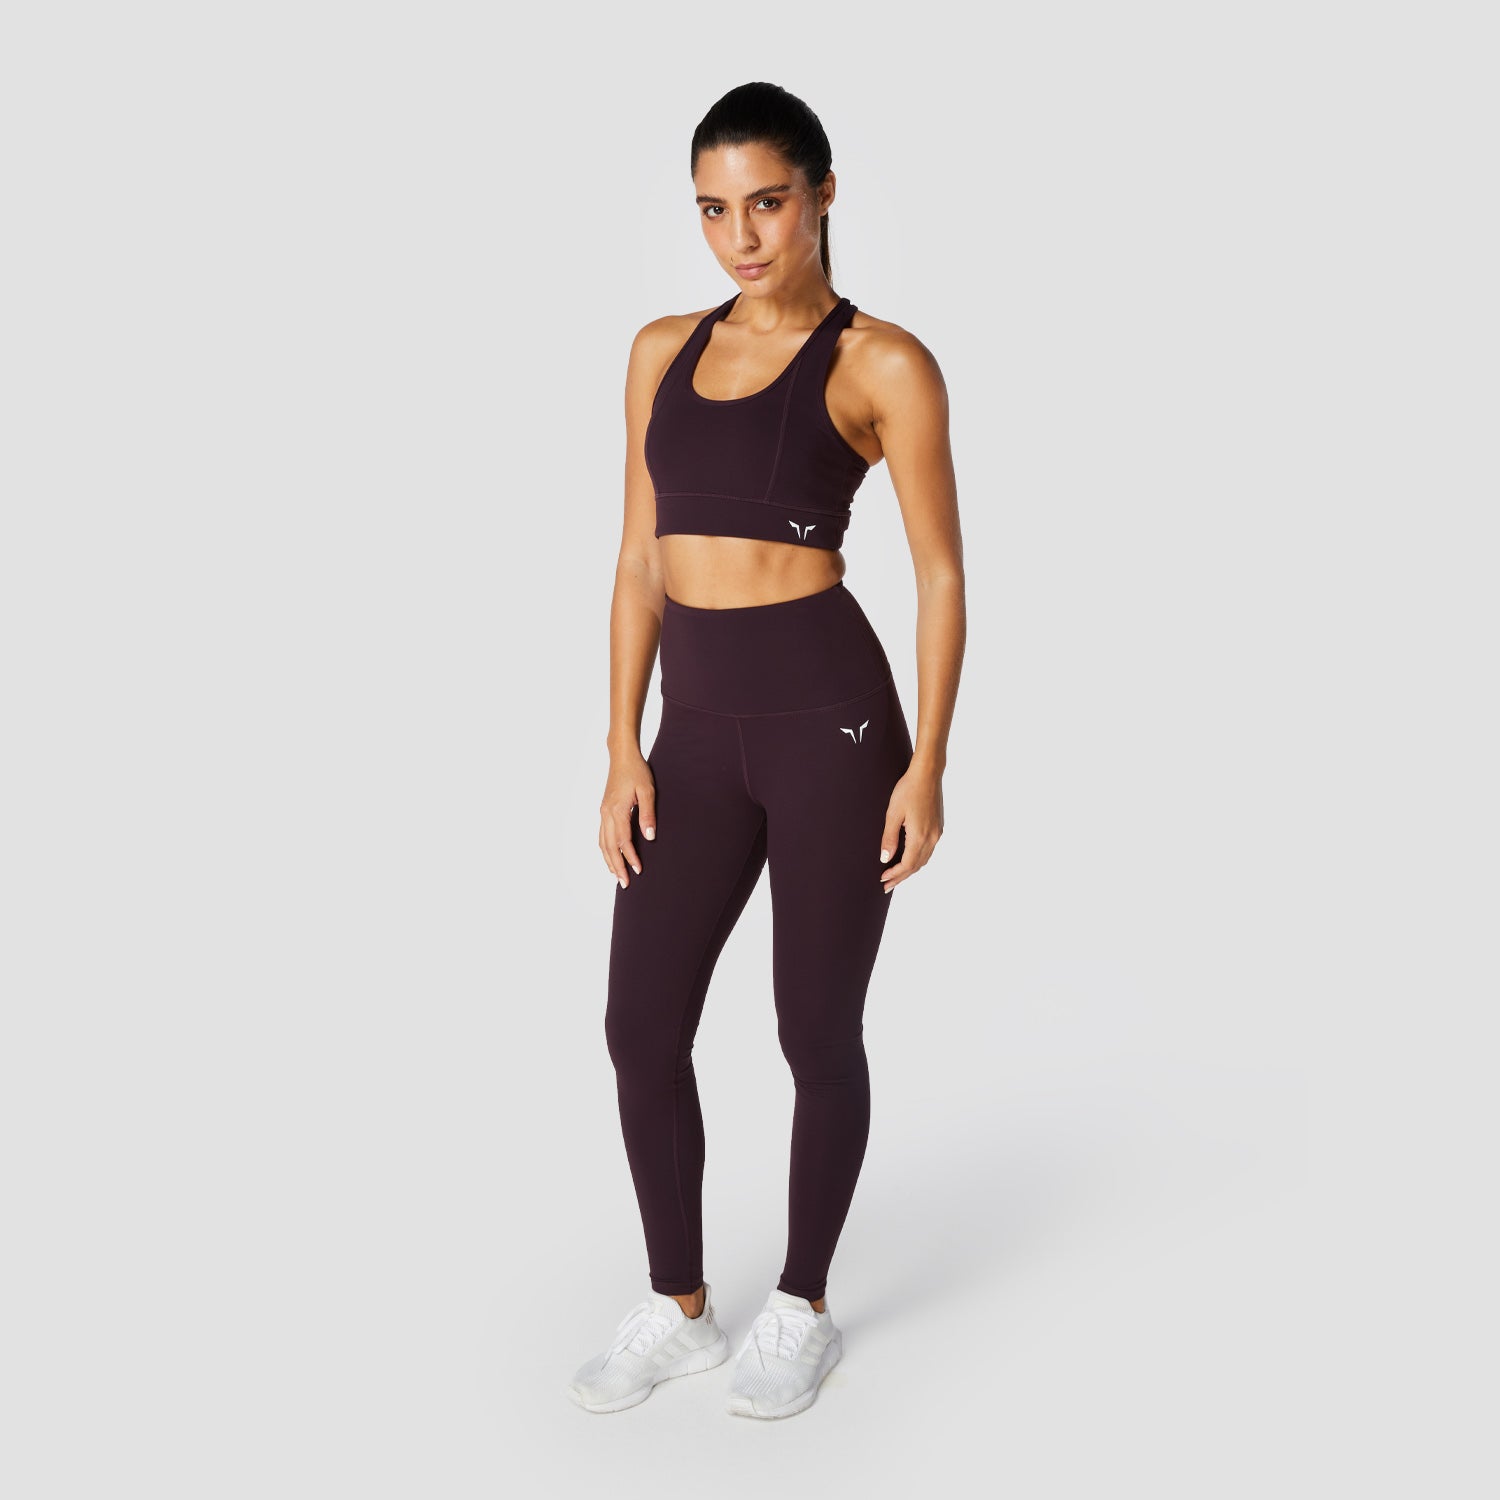 squatwolf-workout-clothes-hera-performance-bra-purple-sports-bra-for-gym